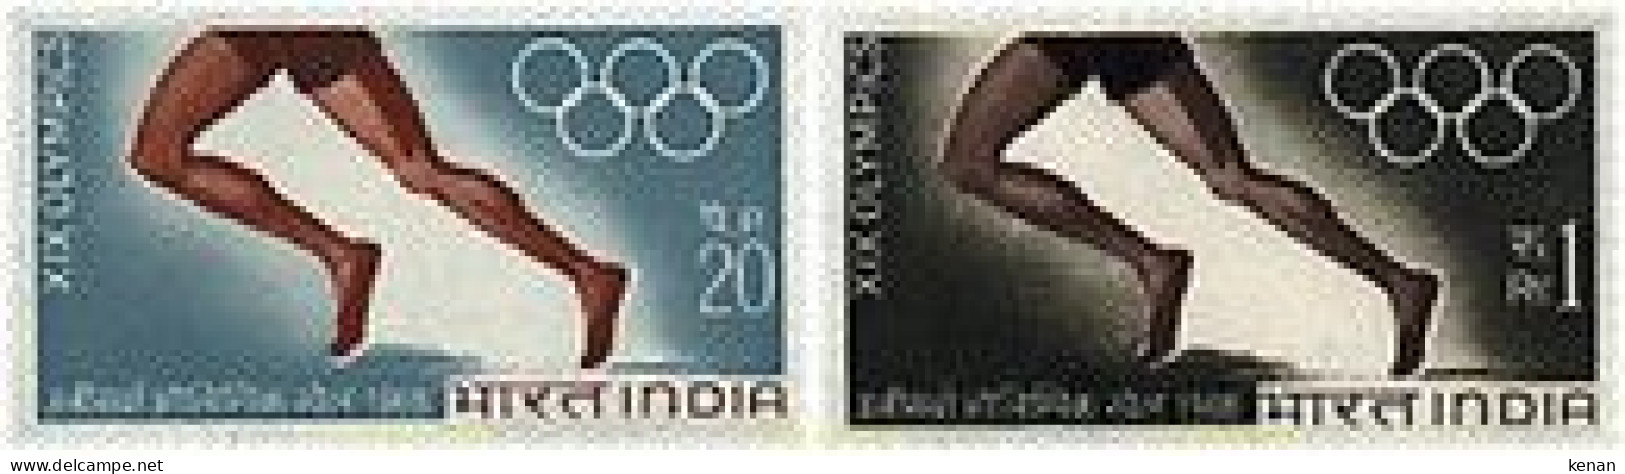 India, 1968, Mi: 455/56 (MNH) - Unused Stamps